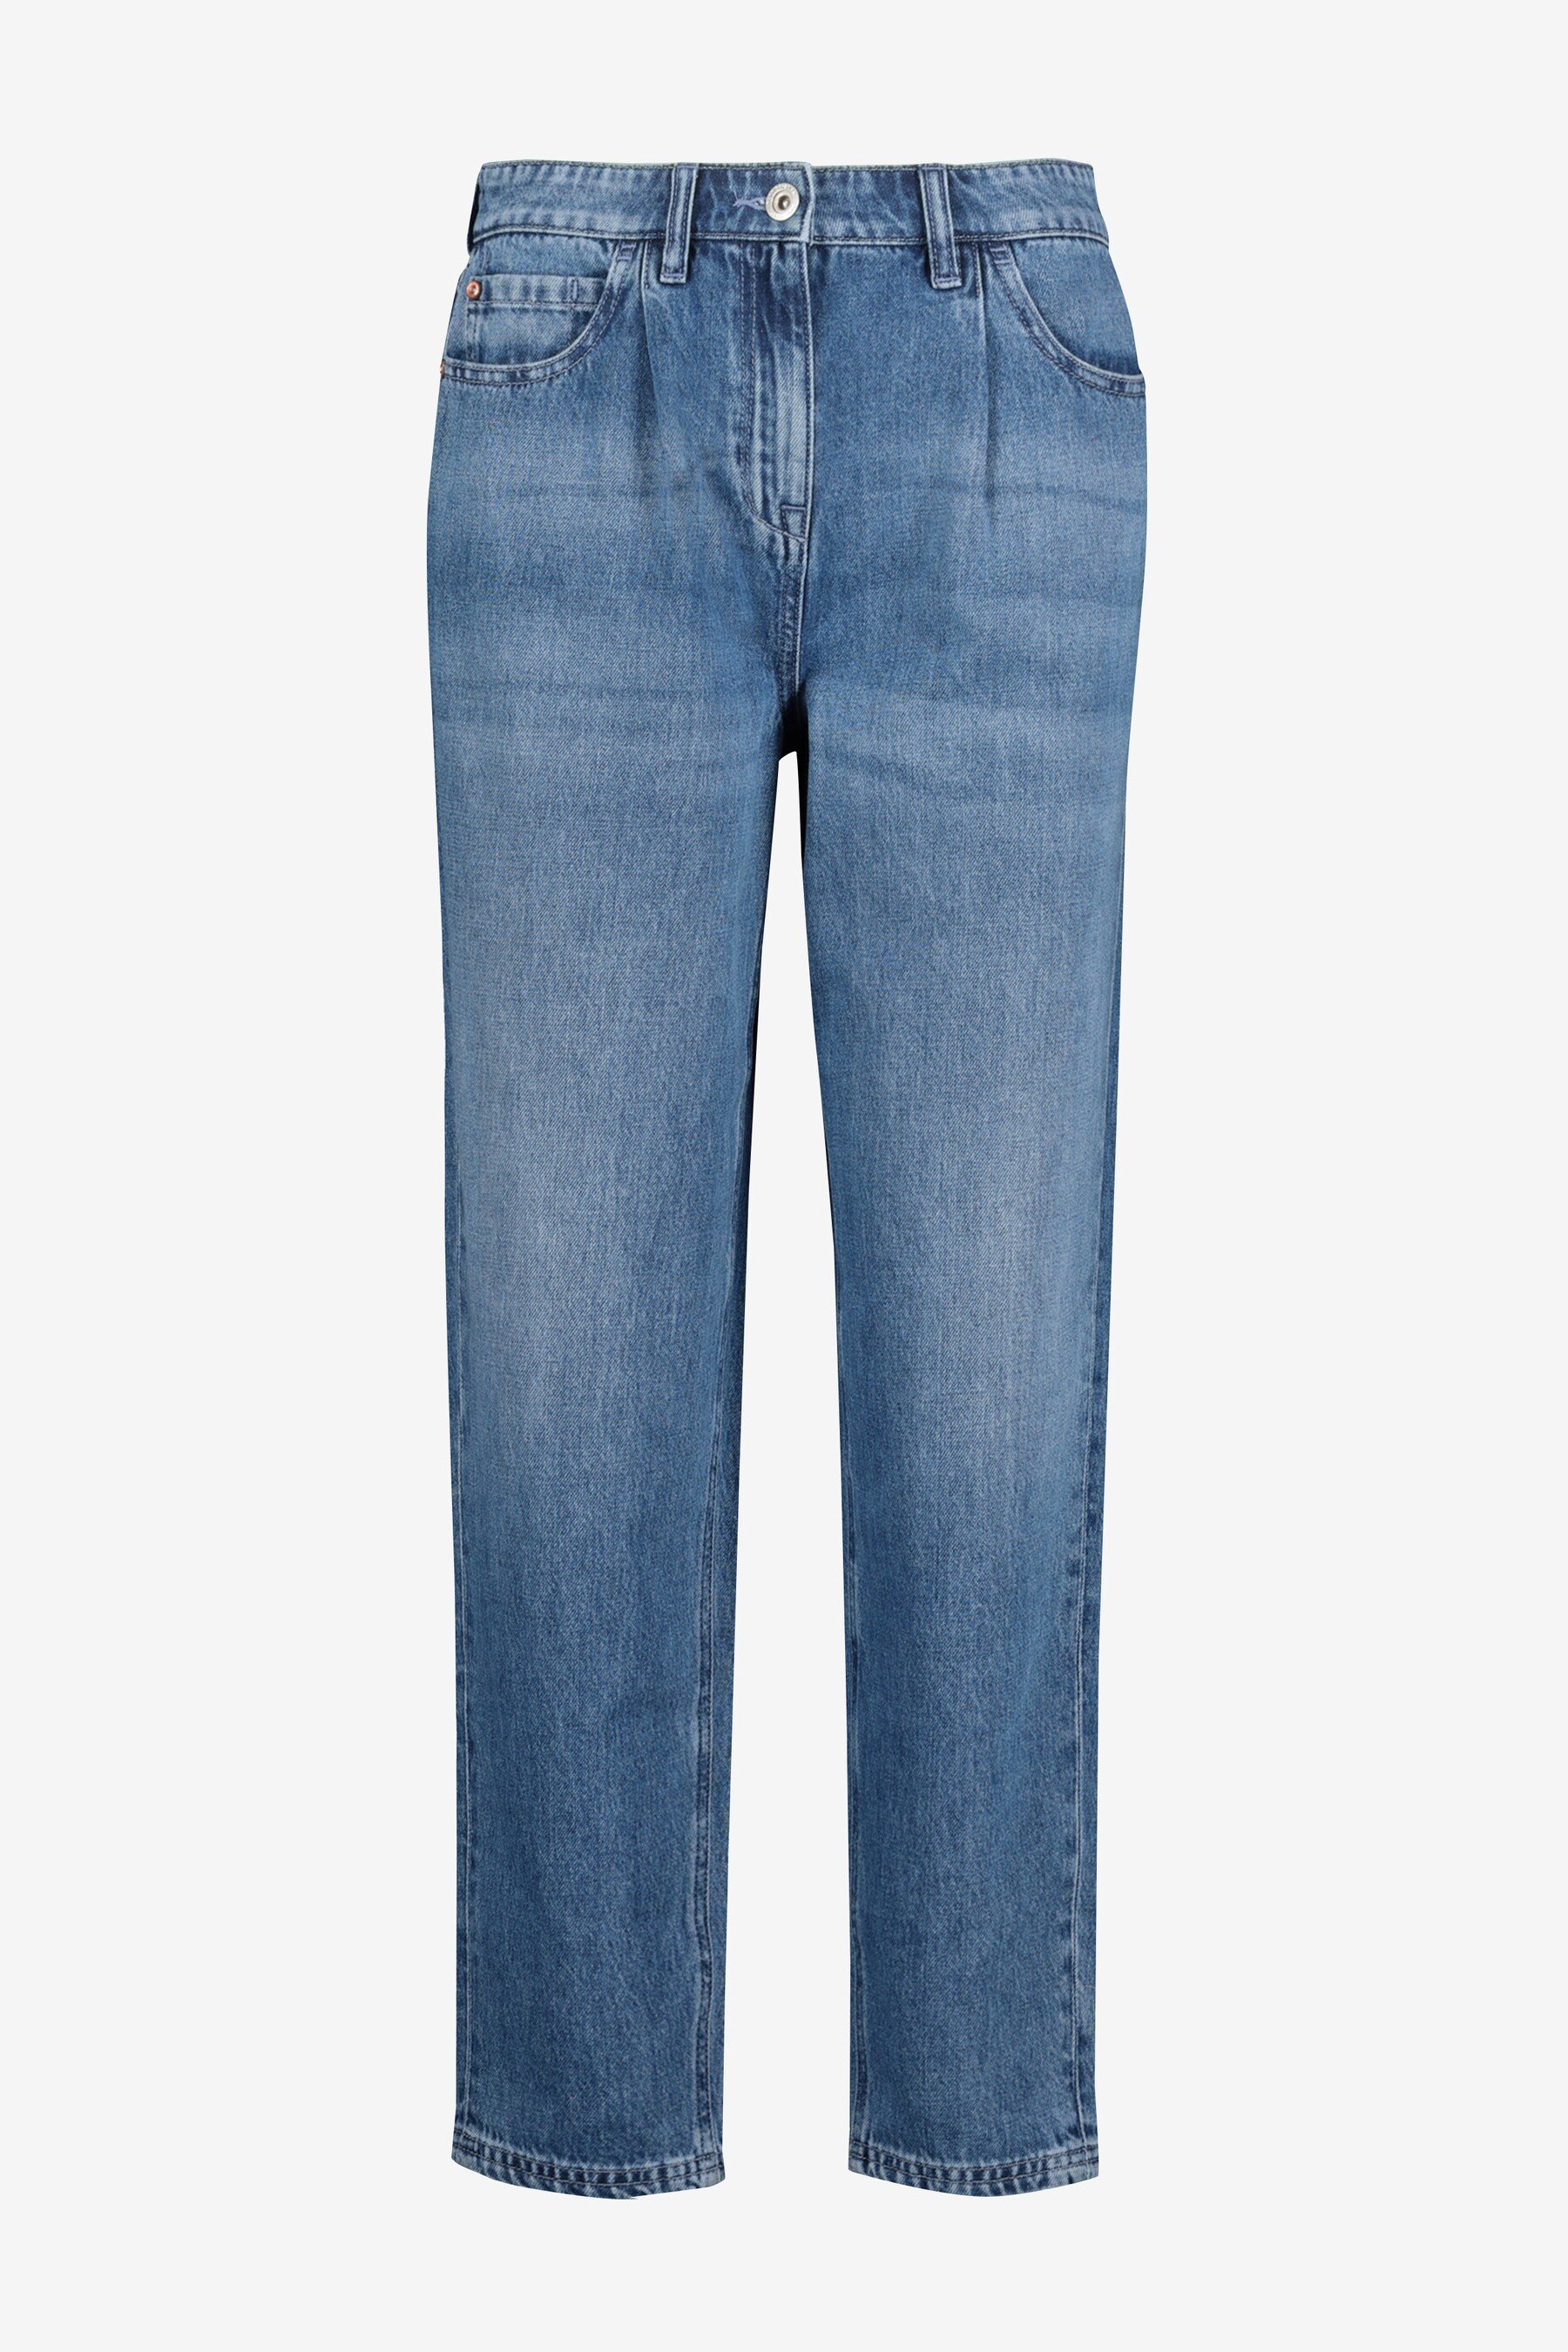 Jeans, £30, Next